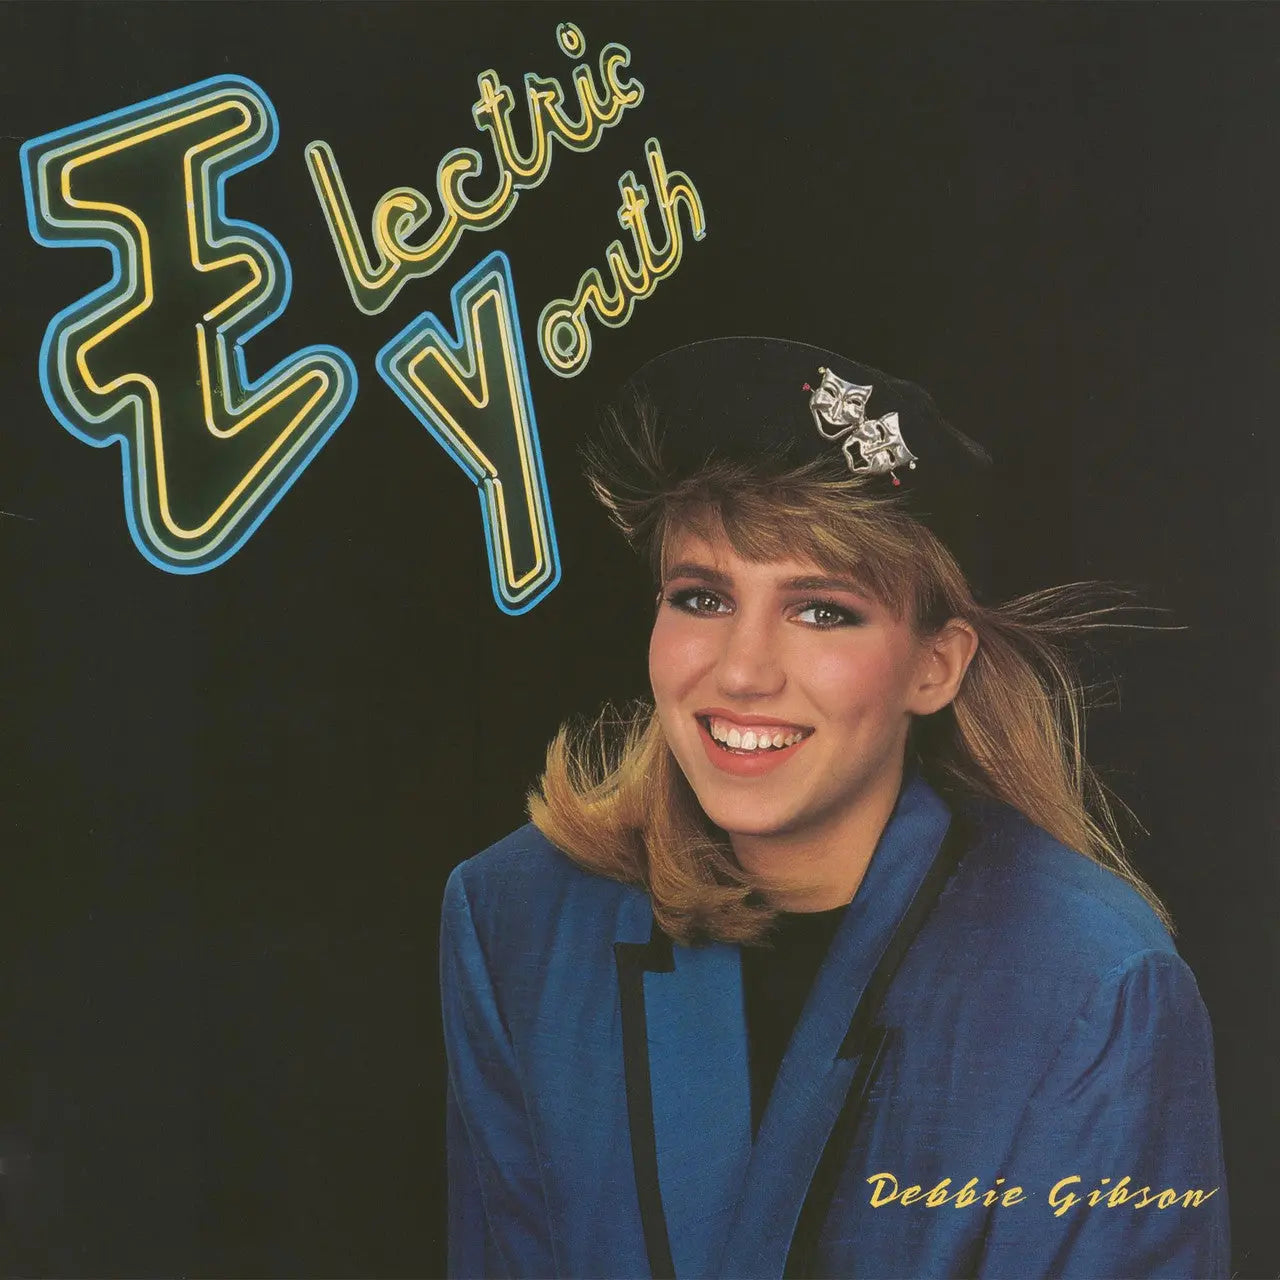 Debbie Gibson - Electric Youth [Vinyl]